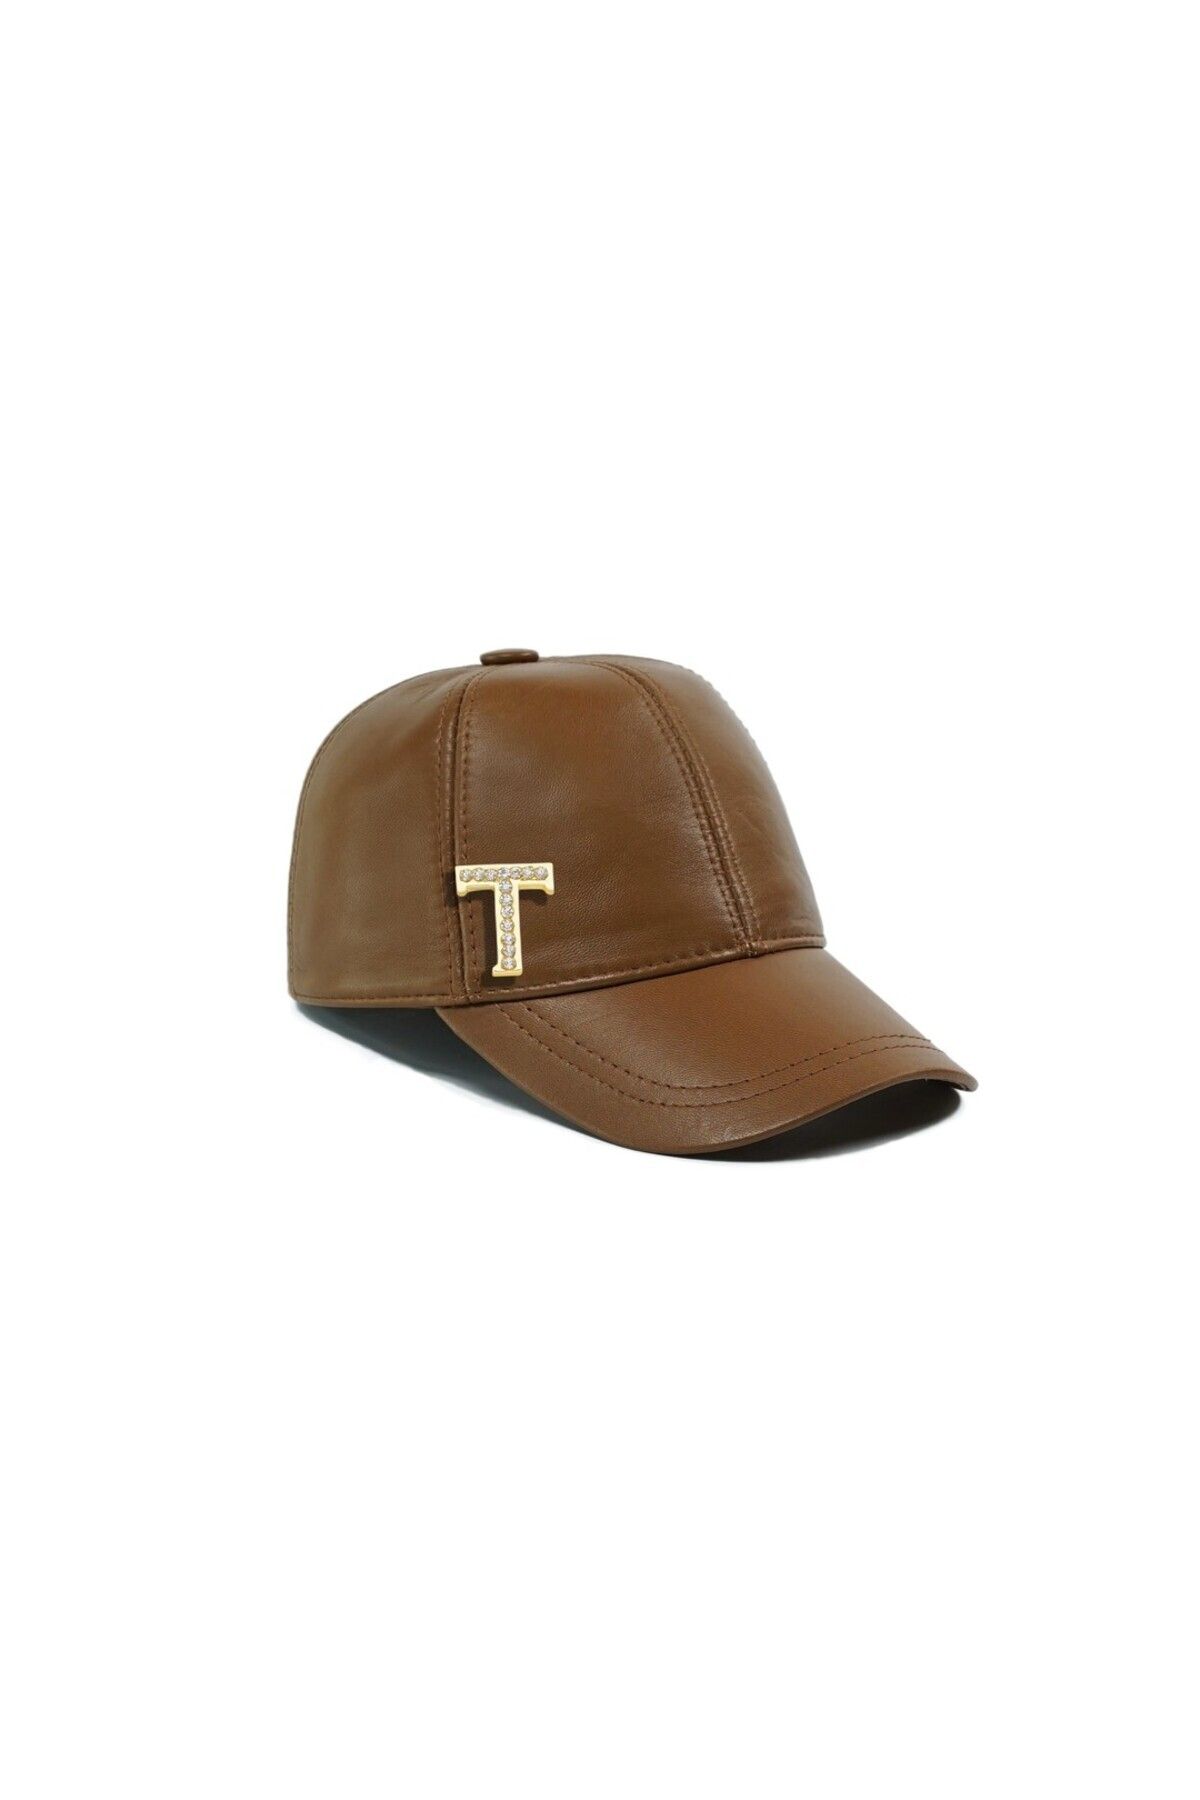 twingold Isminize Özel Deri Kep Şapka